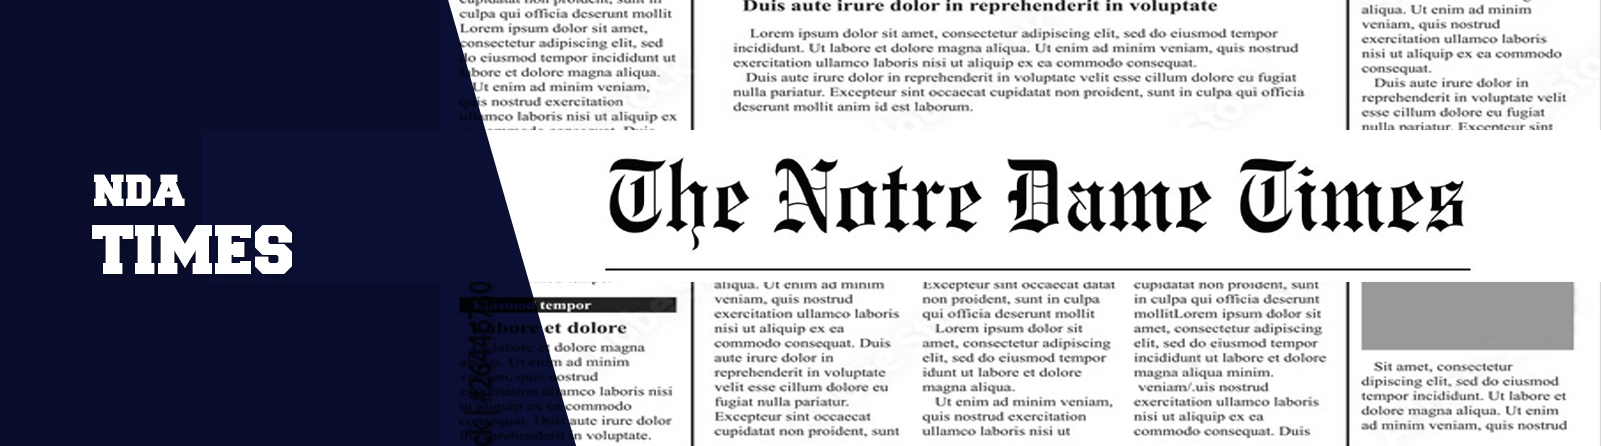 Notre Dame Academy Newspaper